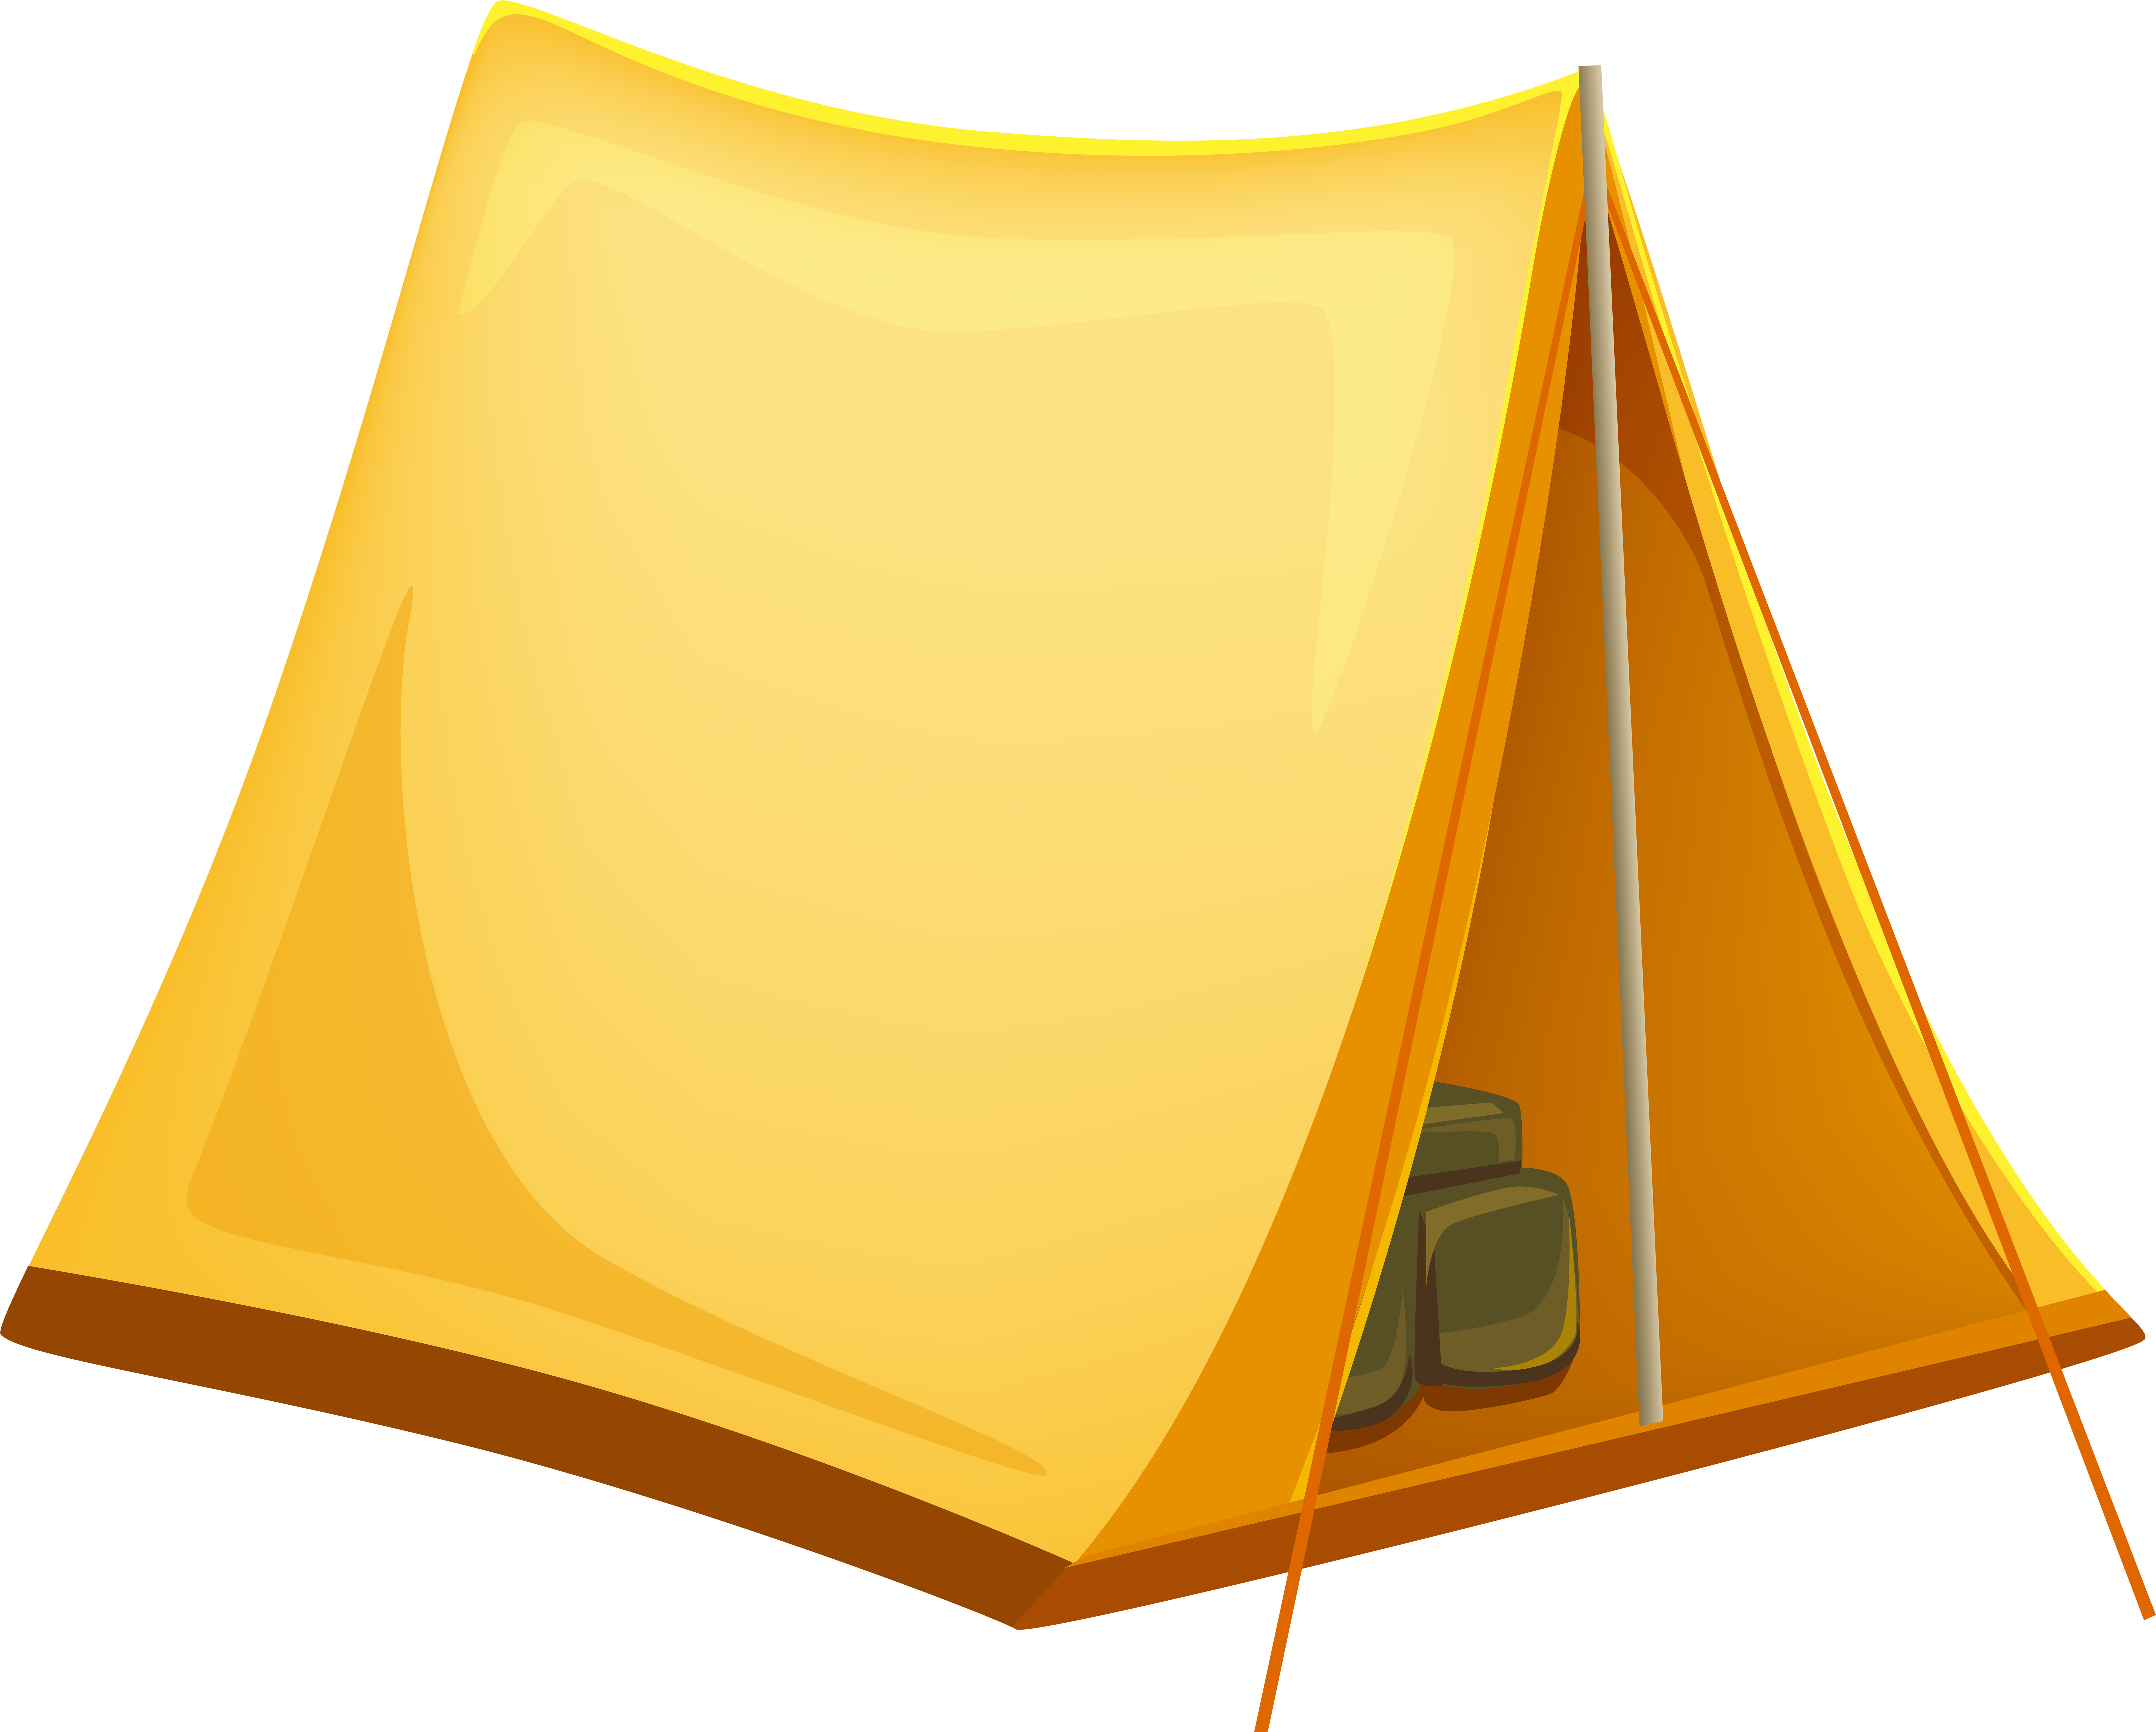 Tent clipart transparent.